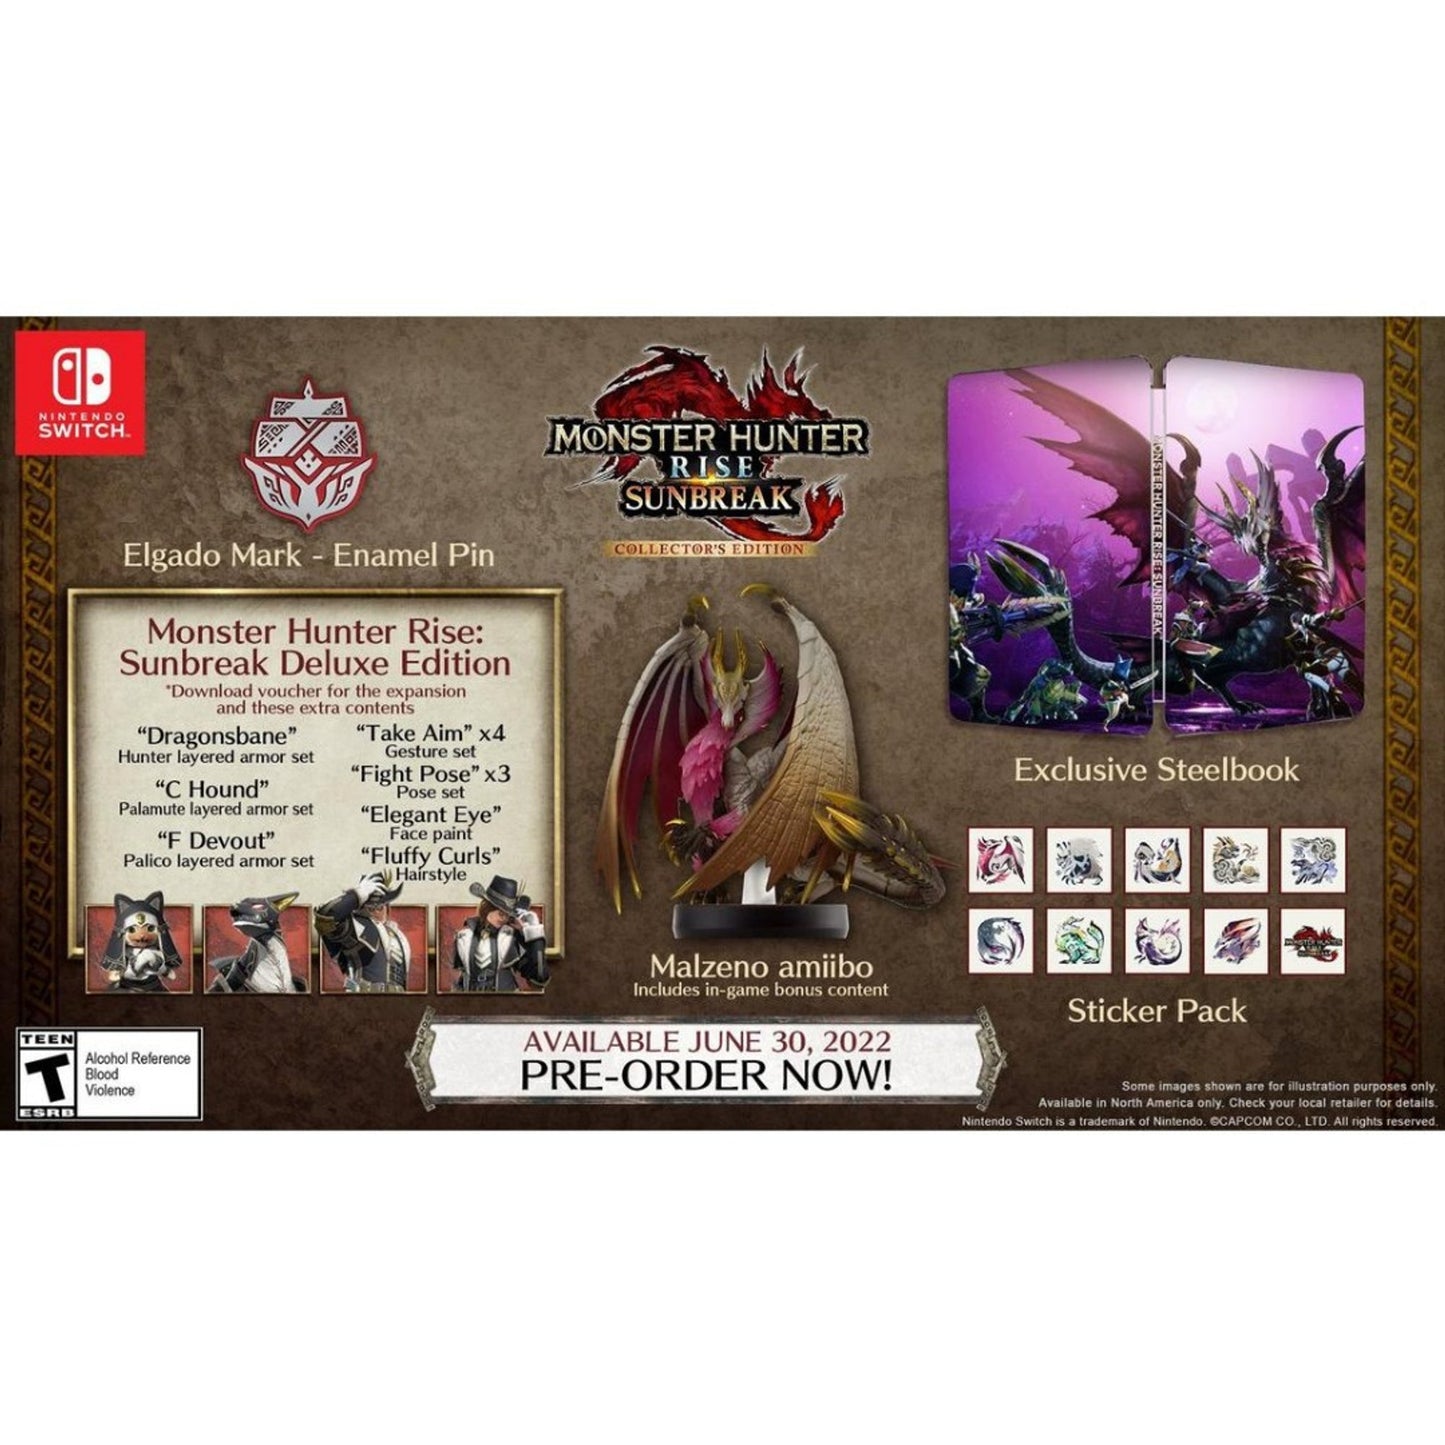 Monster Hunter Rise: Sunbreak Collector's Edition GameStop Exclusive - Nintendo Switch 6-30-22 Release